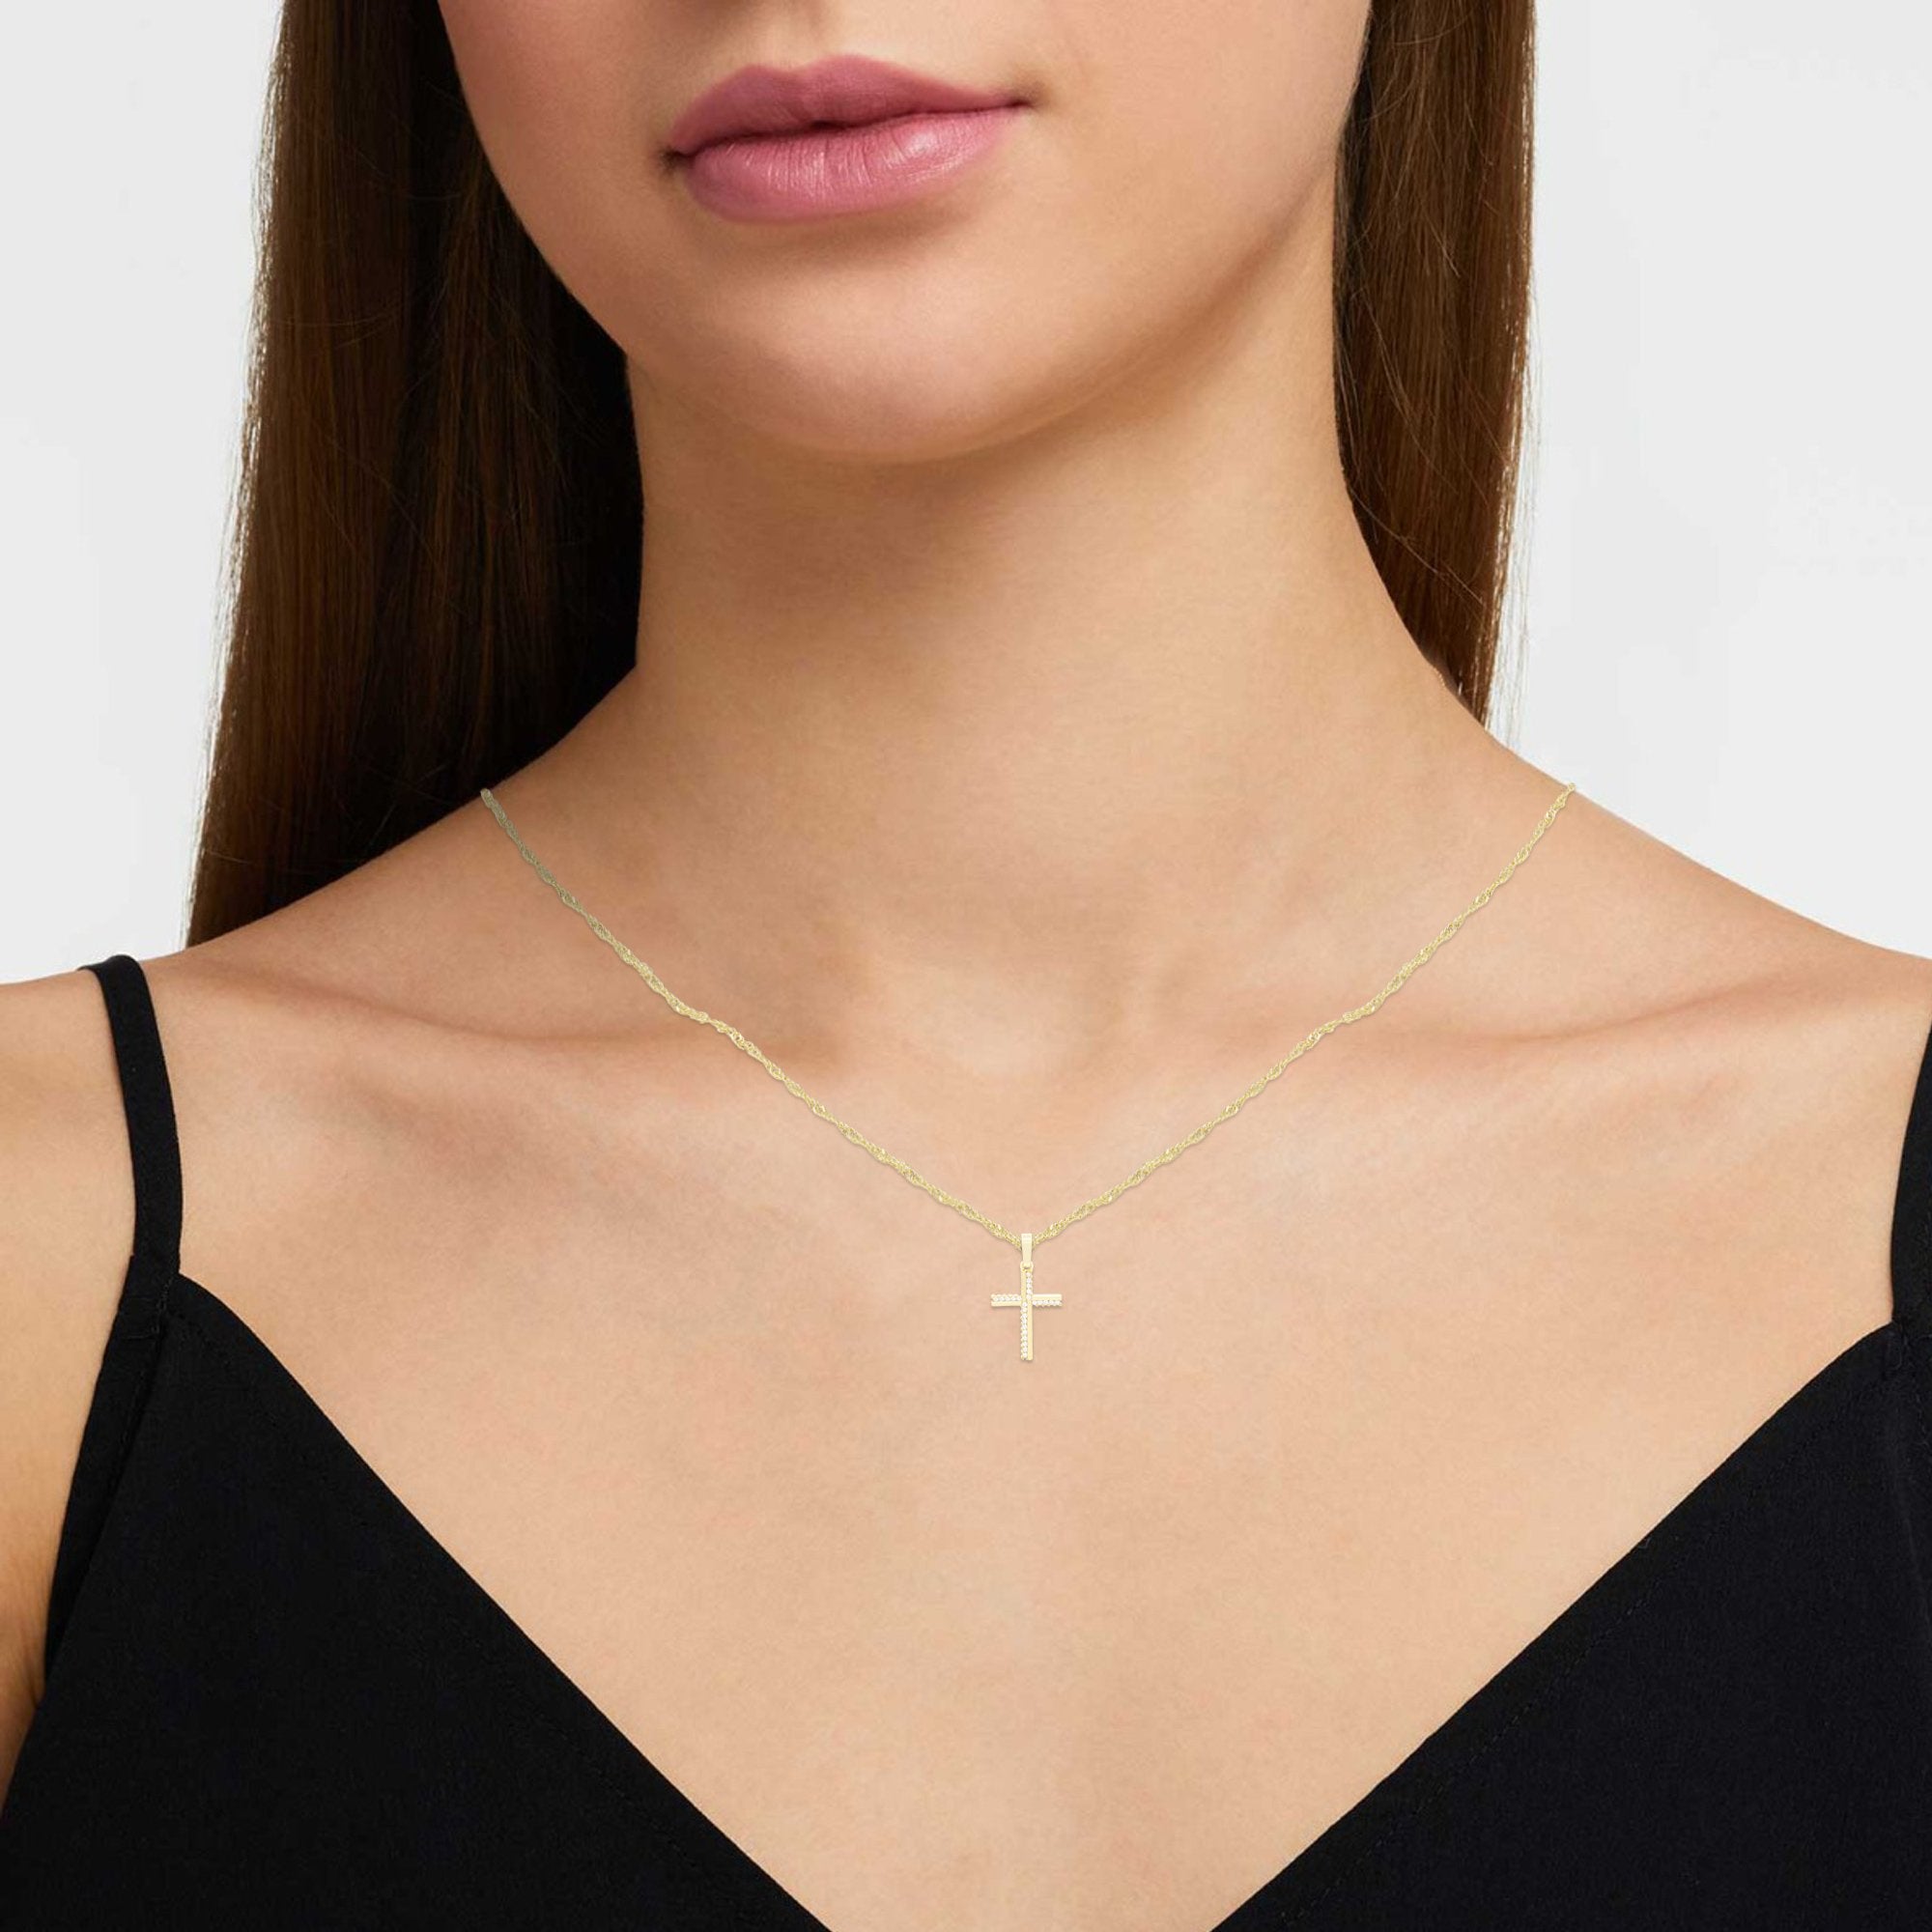 Elegant Cross Cubic Zirconia Pendant With Necklace Set 14K Gold Filled